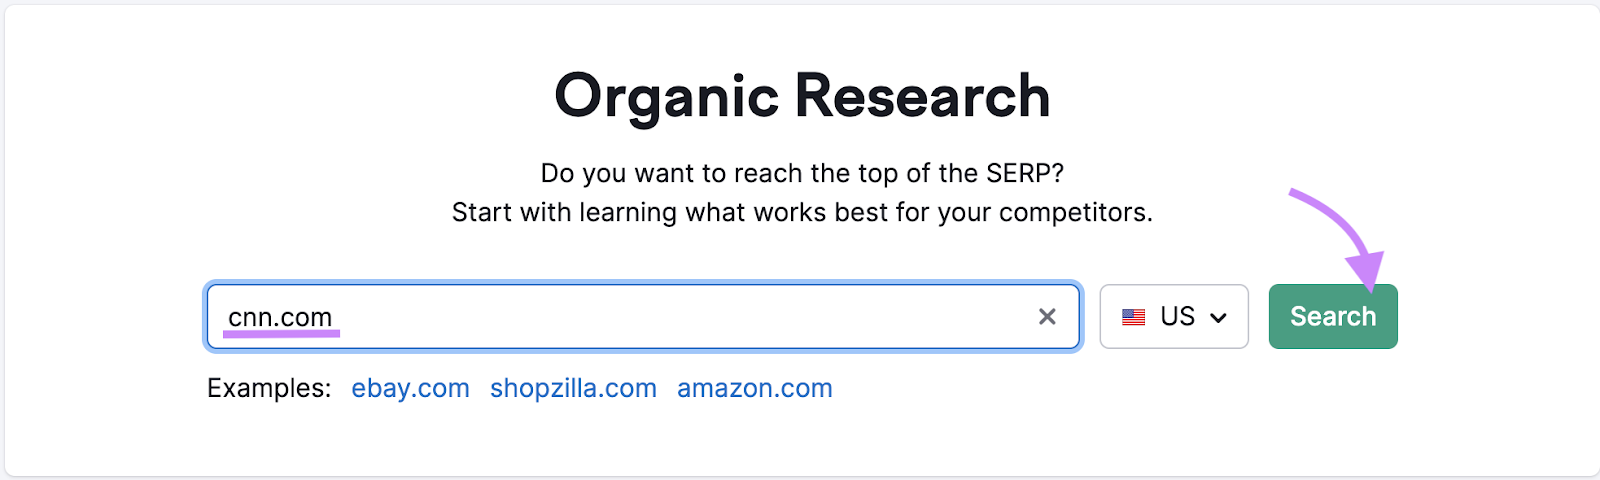 "cnn.com" entered into Organic Research search bar